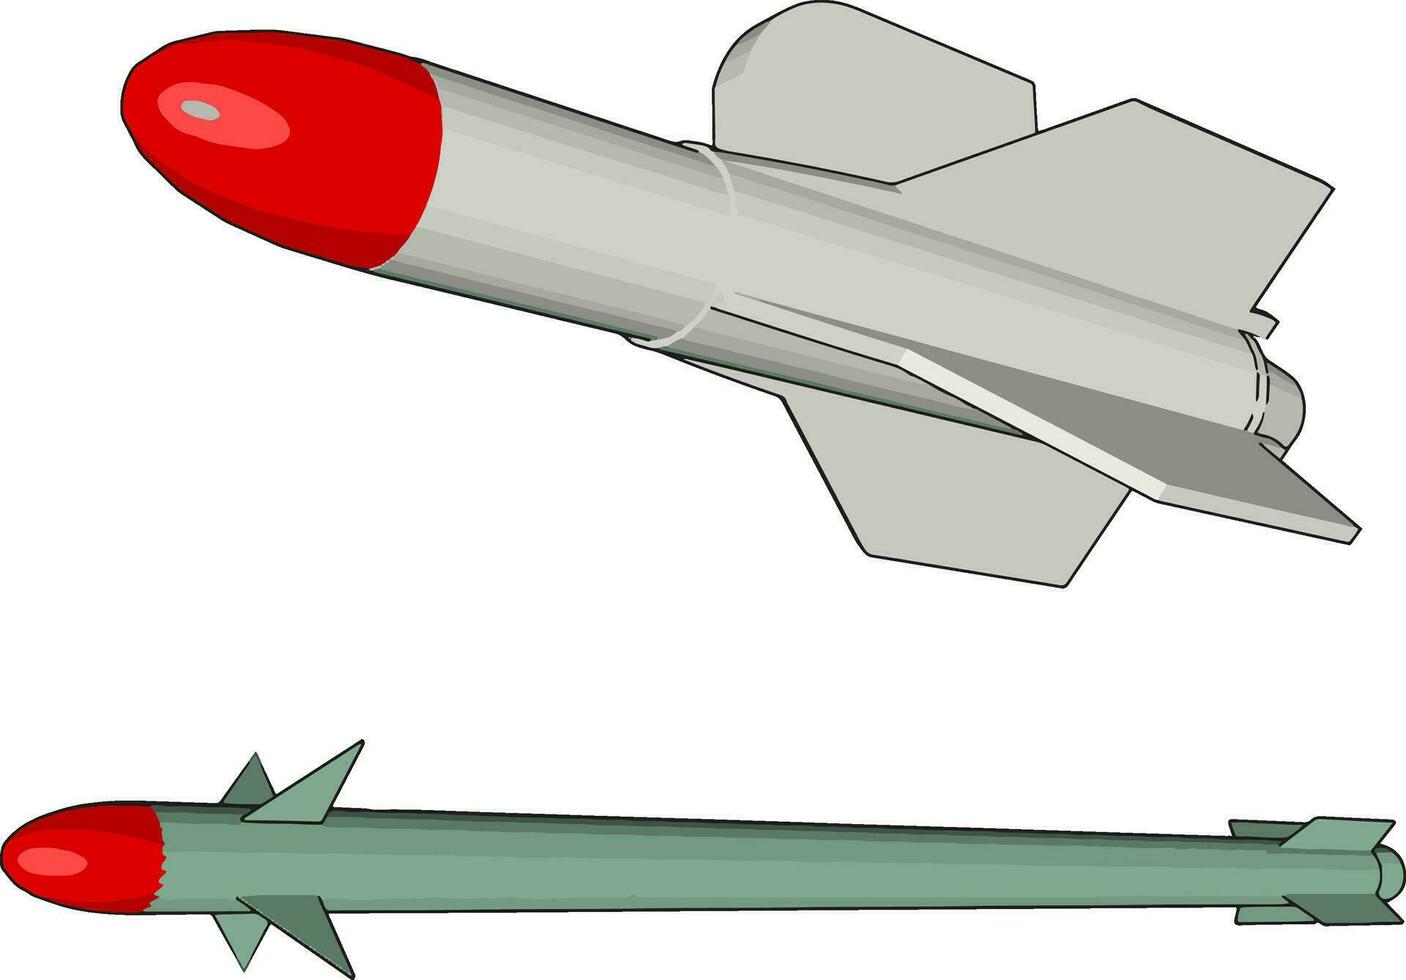 Rocket, illustration, vector on white background.